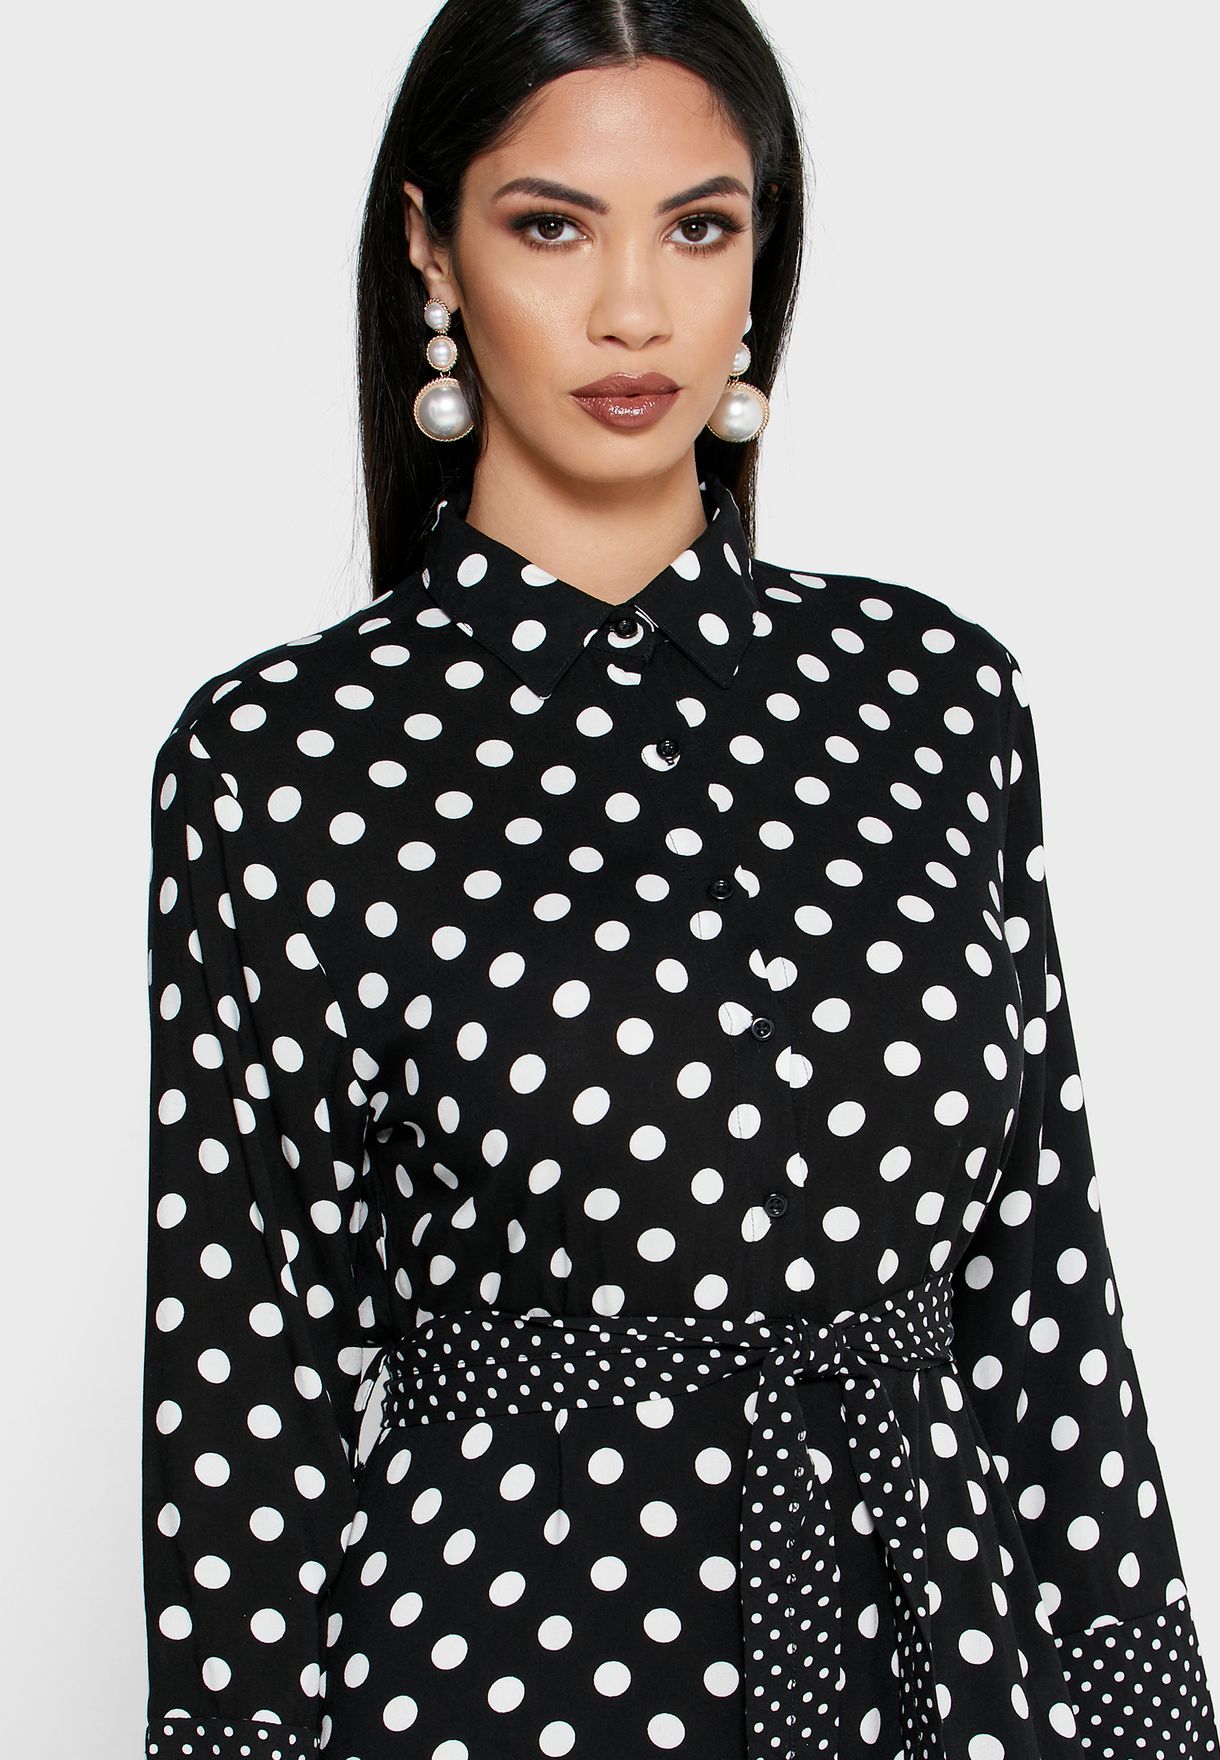 Polka Dot Self Tie Shirt Maxi Dress